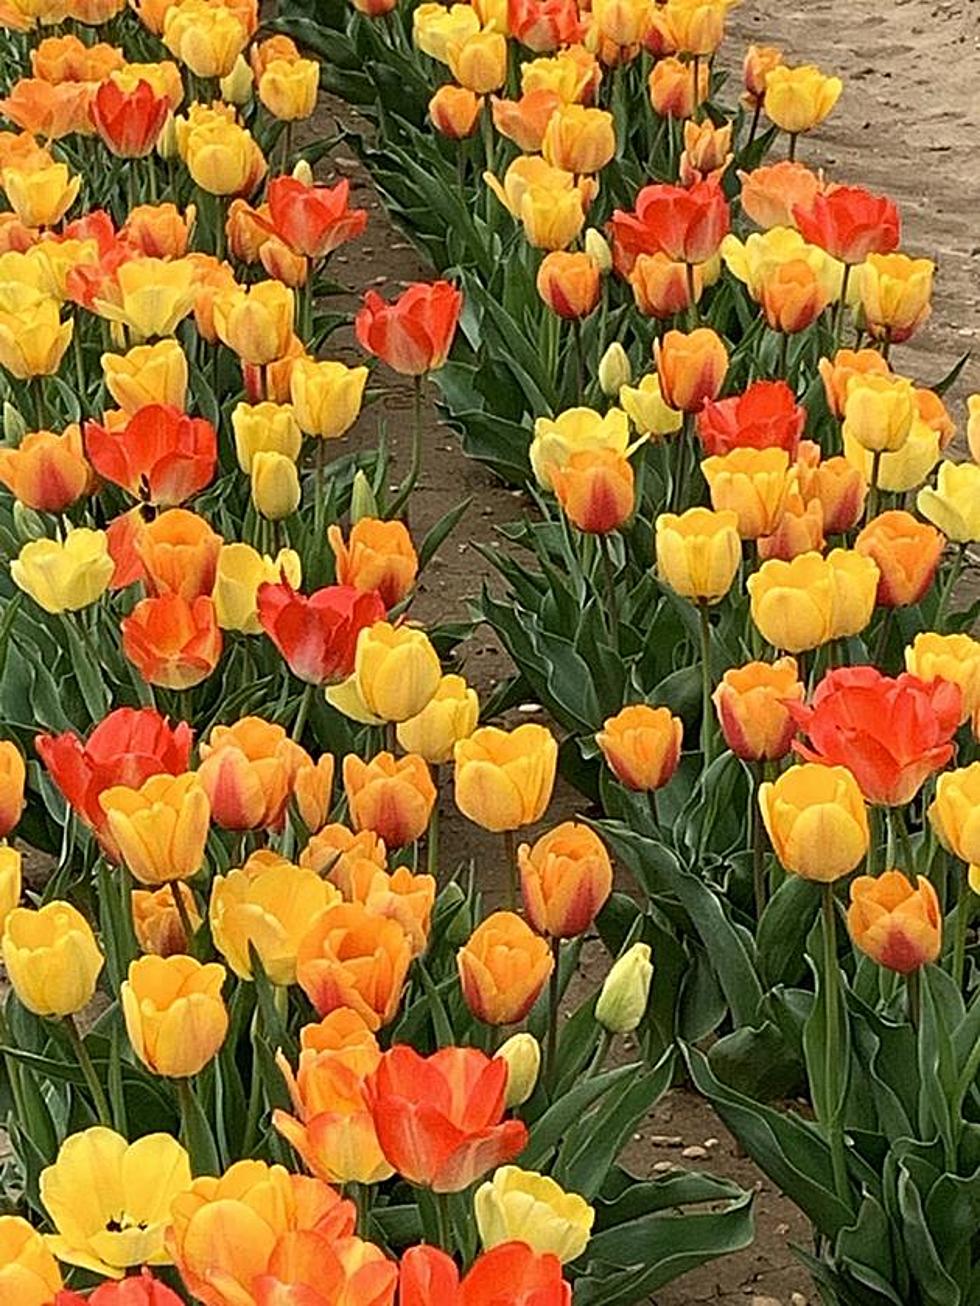 Holland Ridge Farms in Cream Ridge, NJ Opening April 11th for U-Pick Tulips